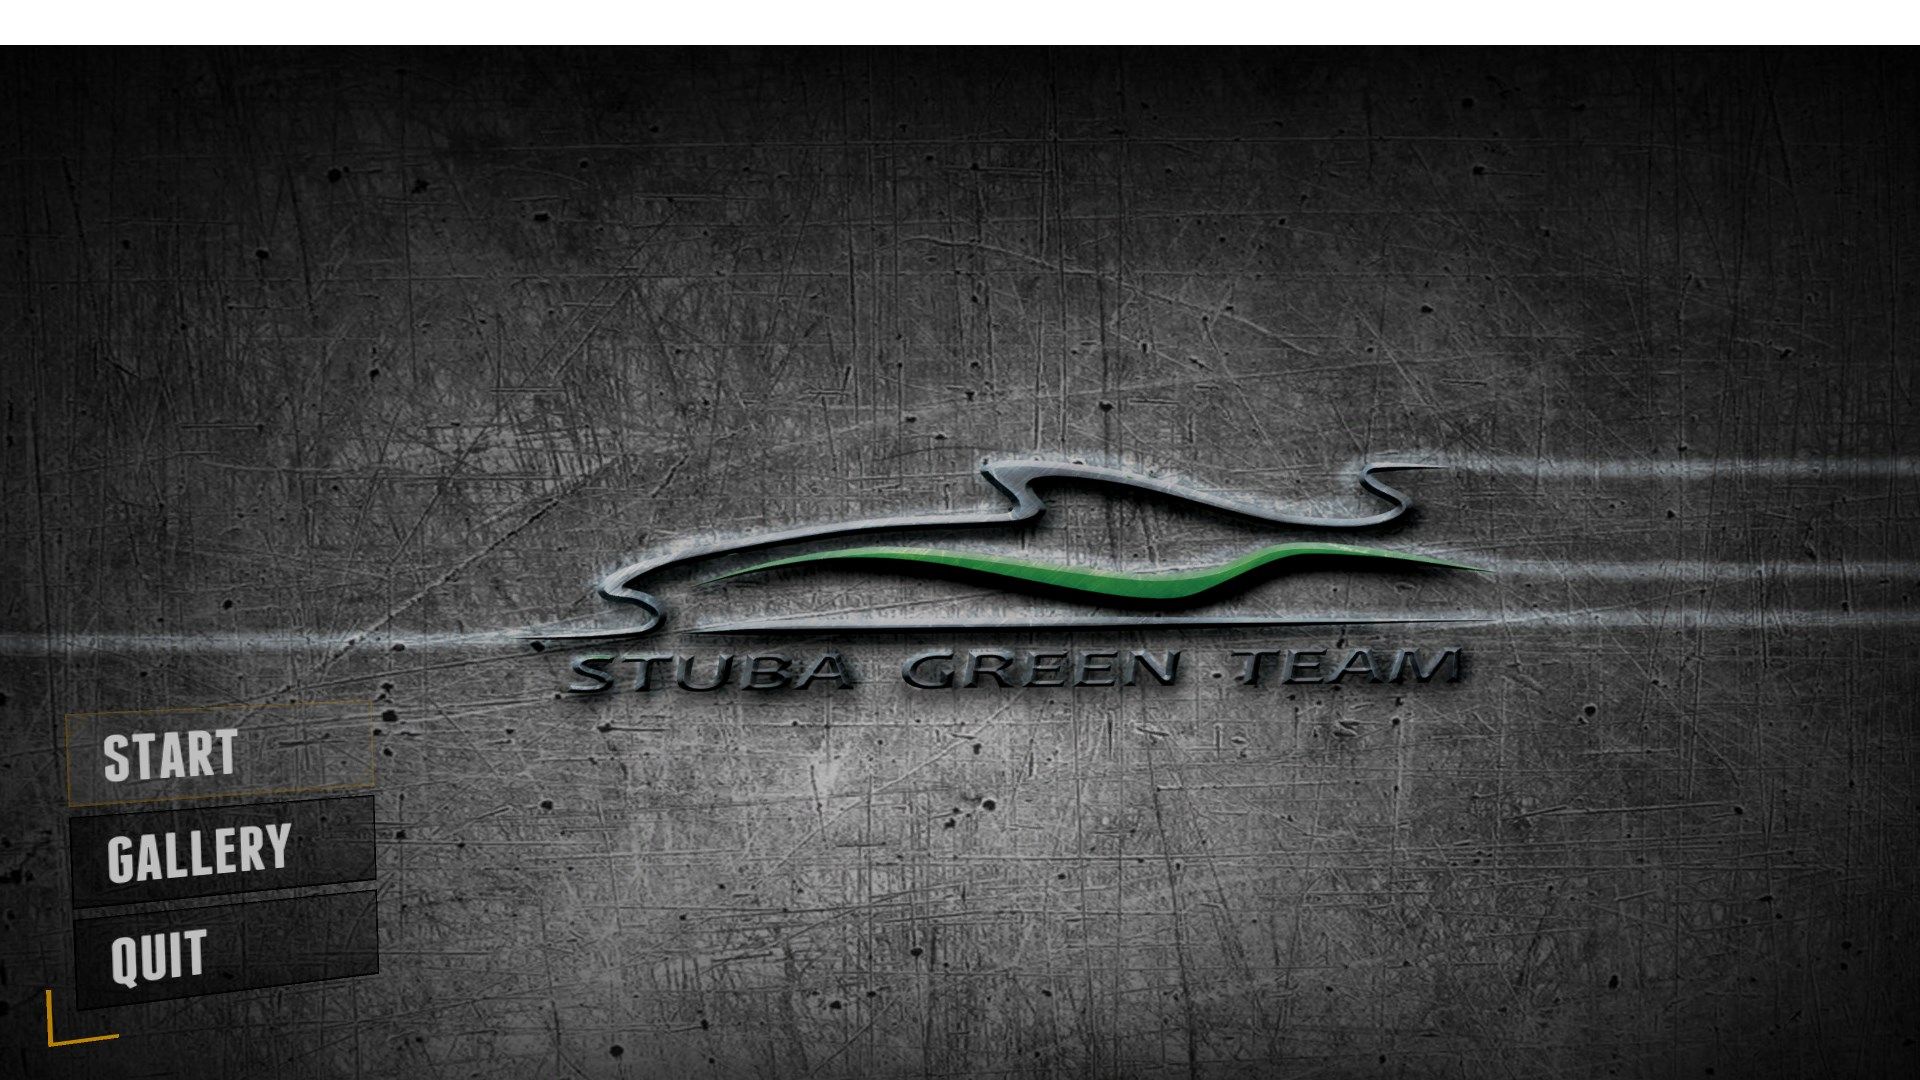 STUBA Green Team Game